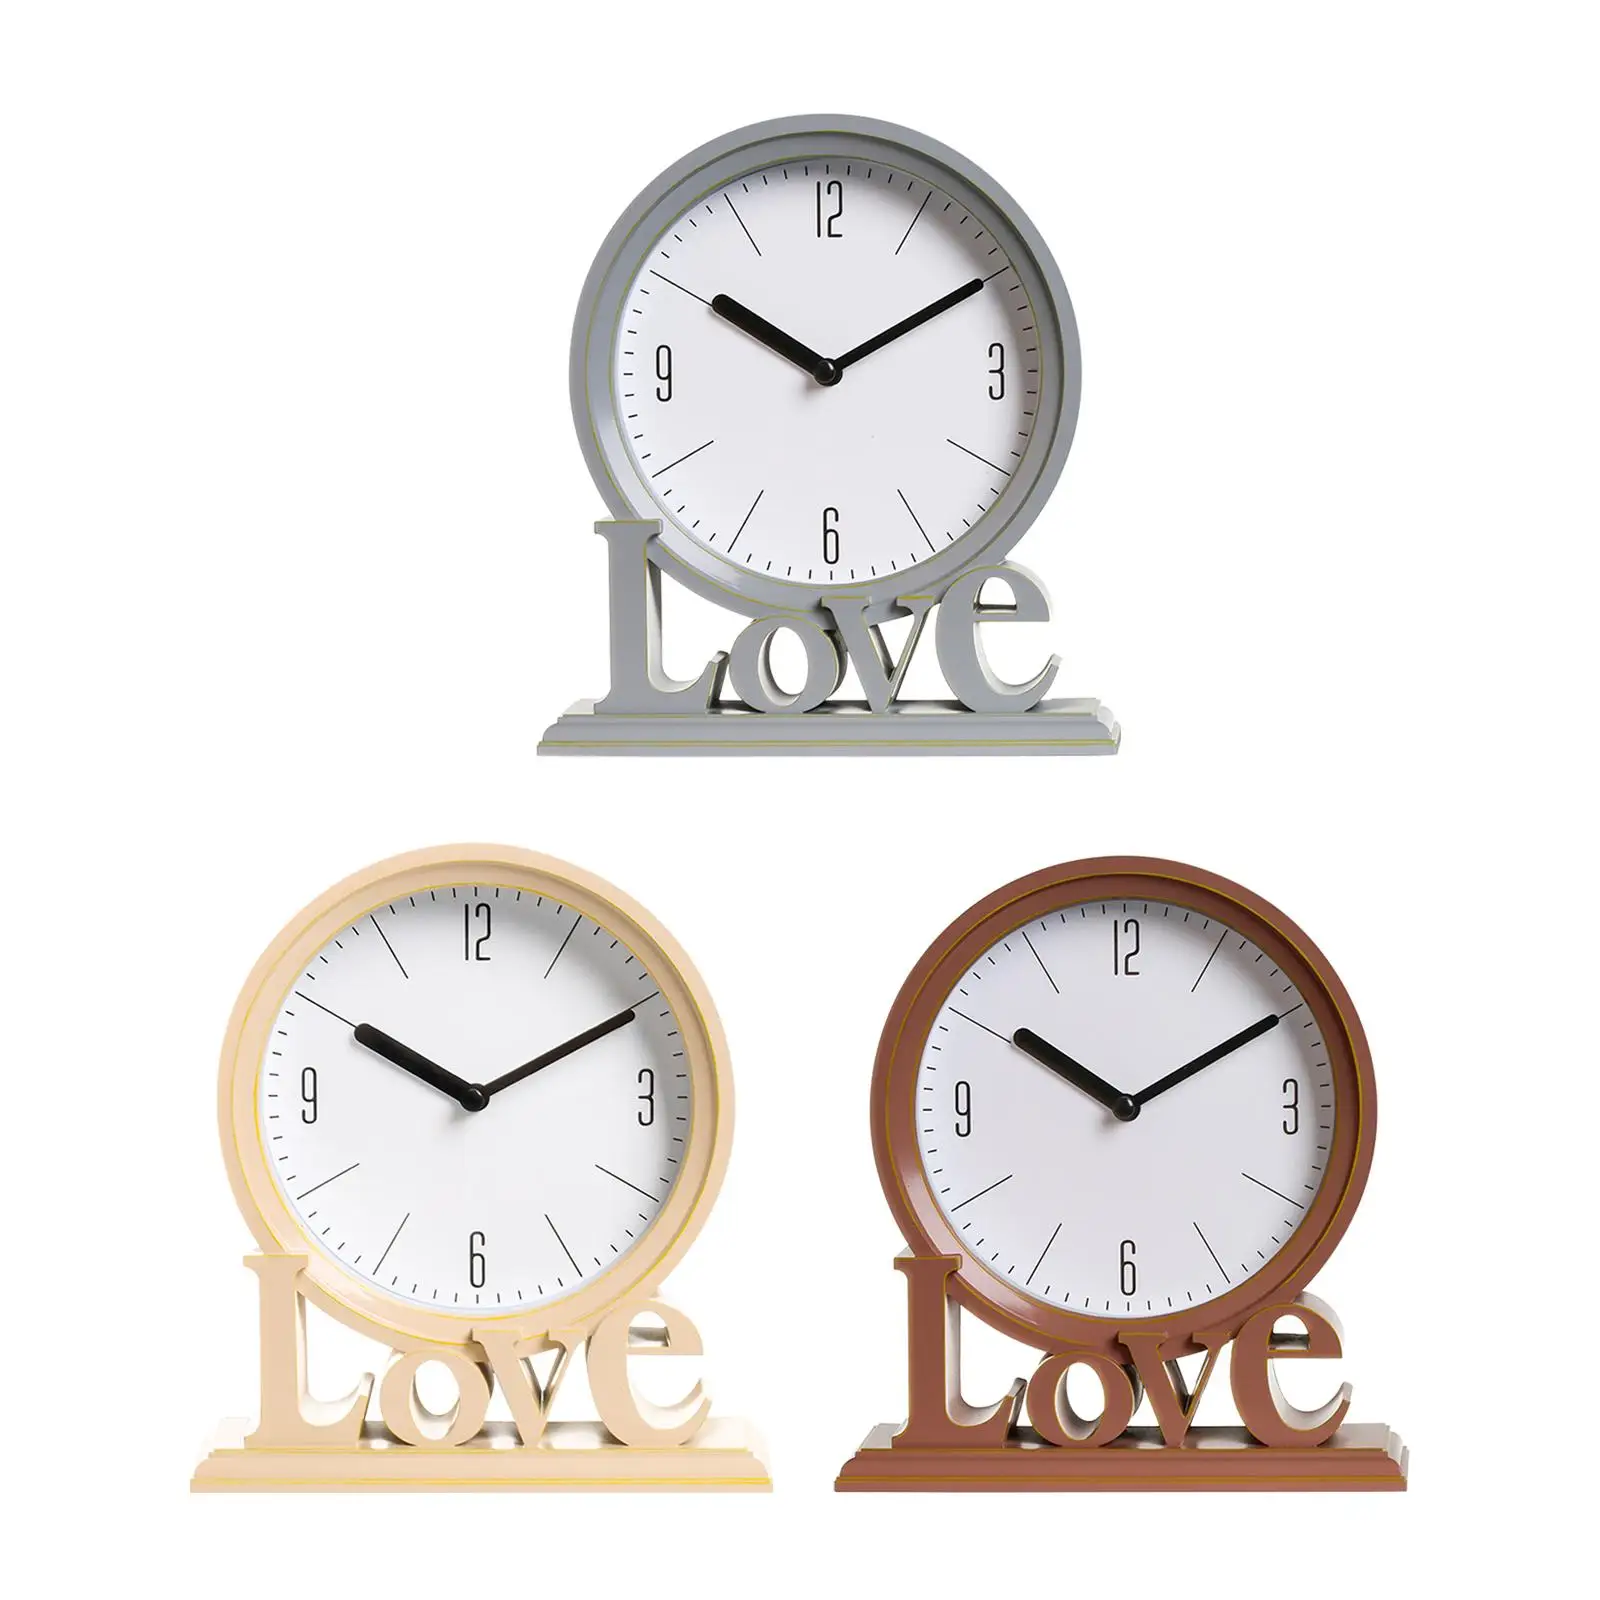 Romantic Love Letter Table Clock Silent Decoration Measure 7x2x8inch Elegant